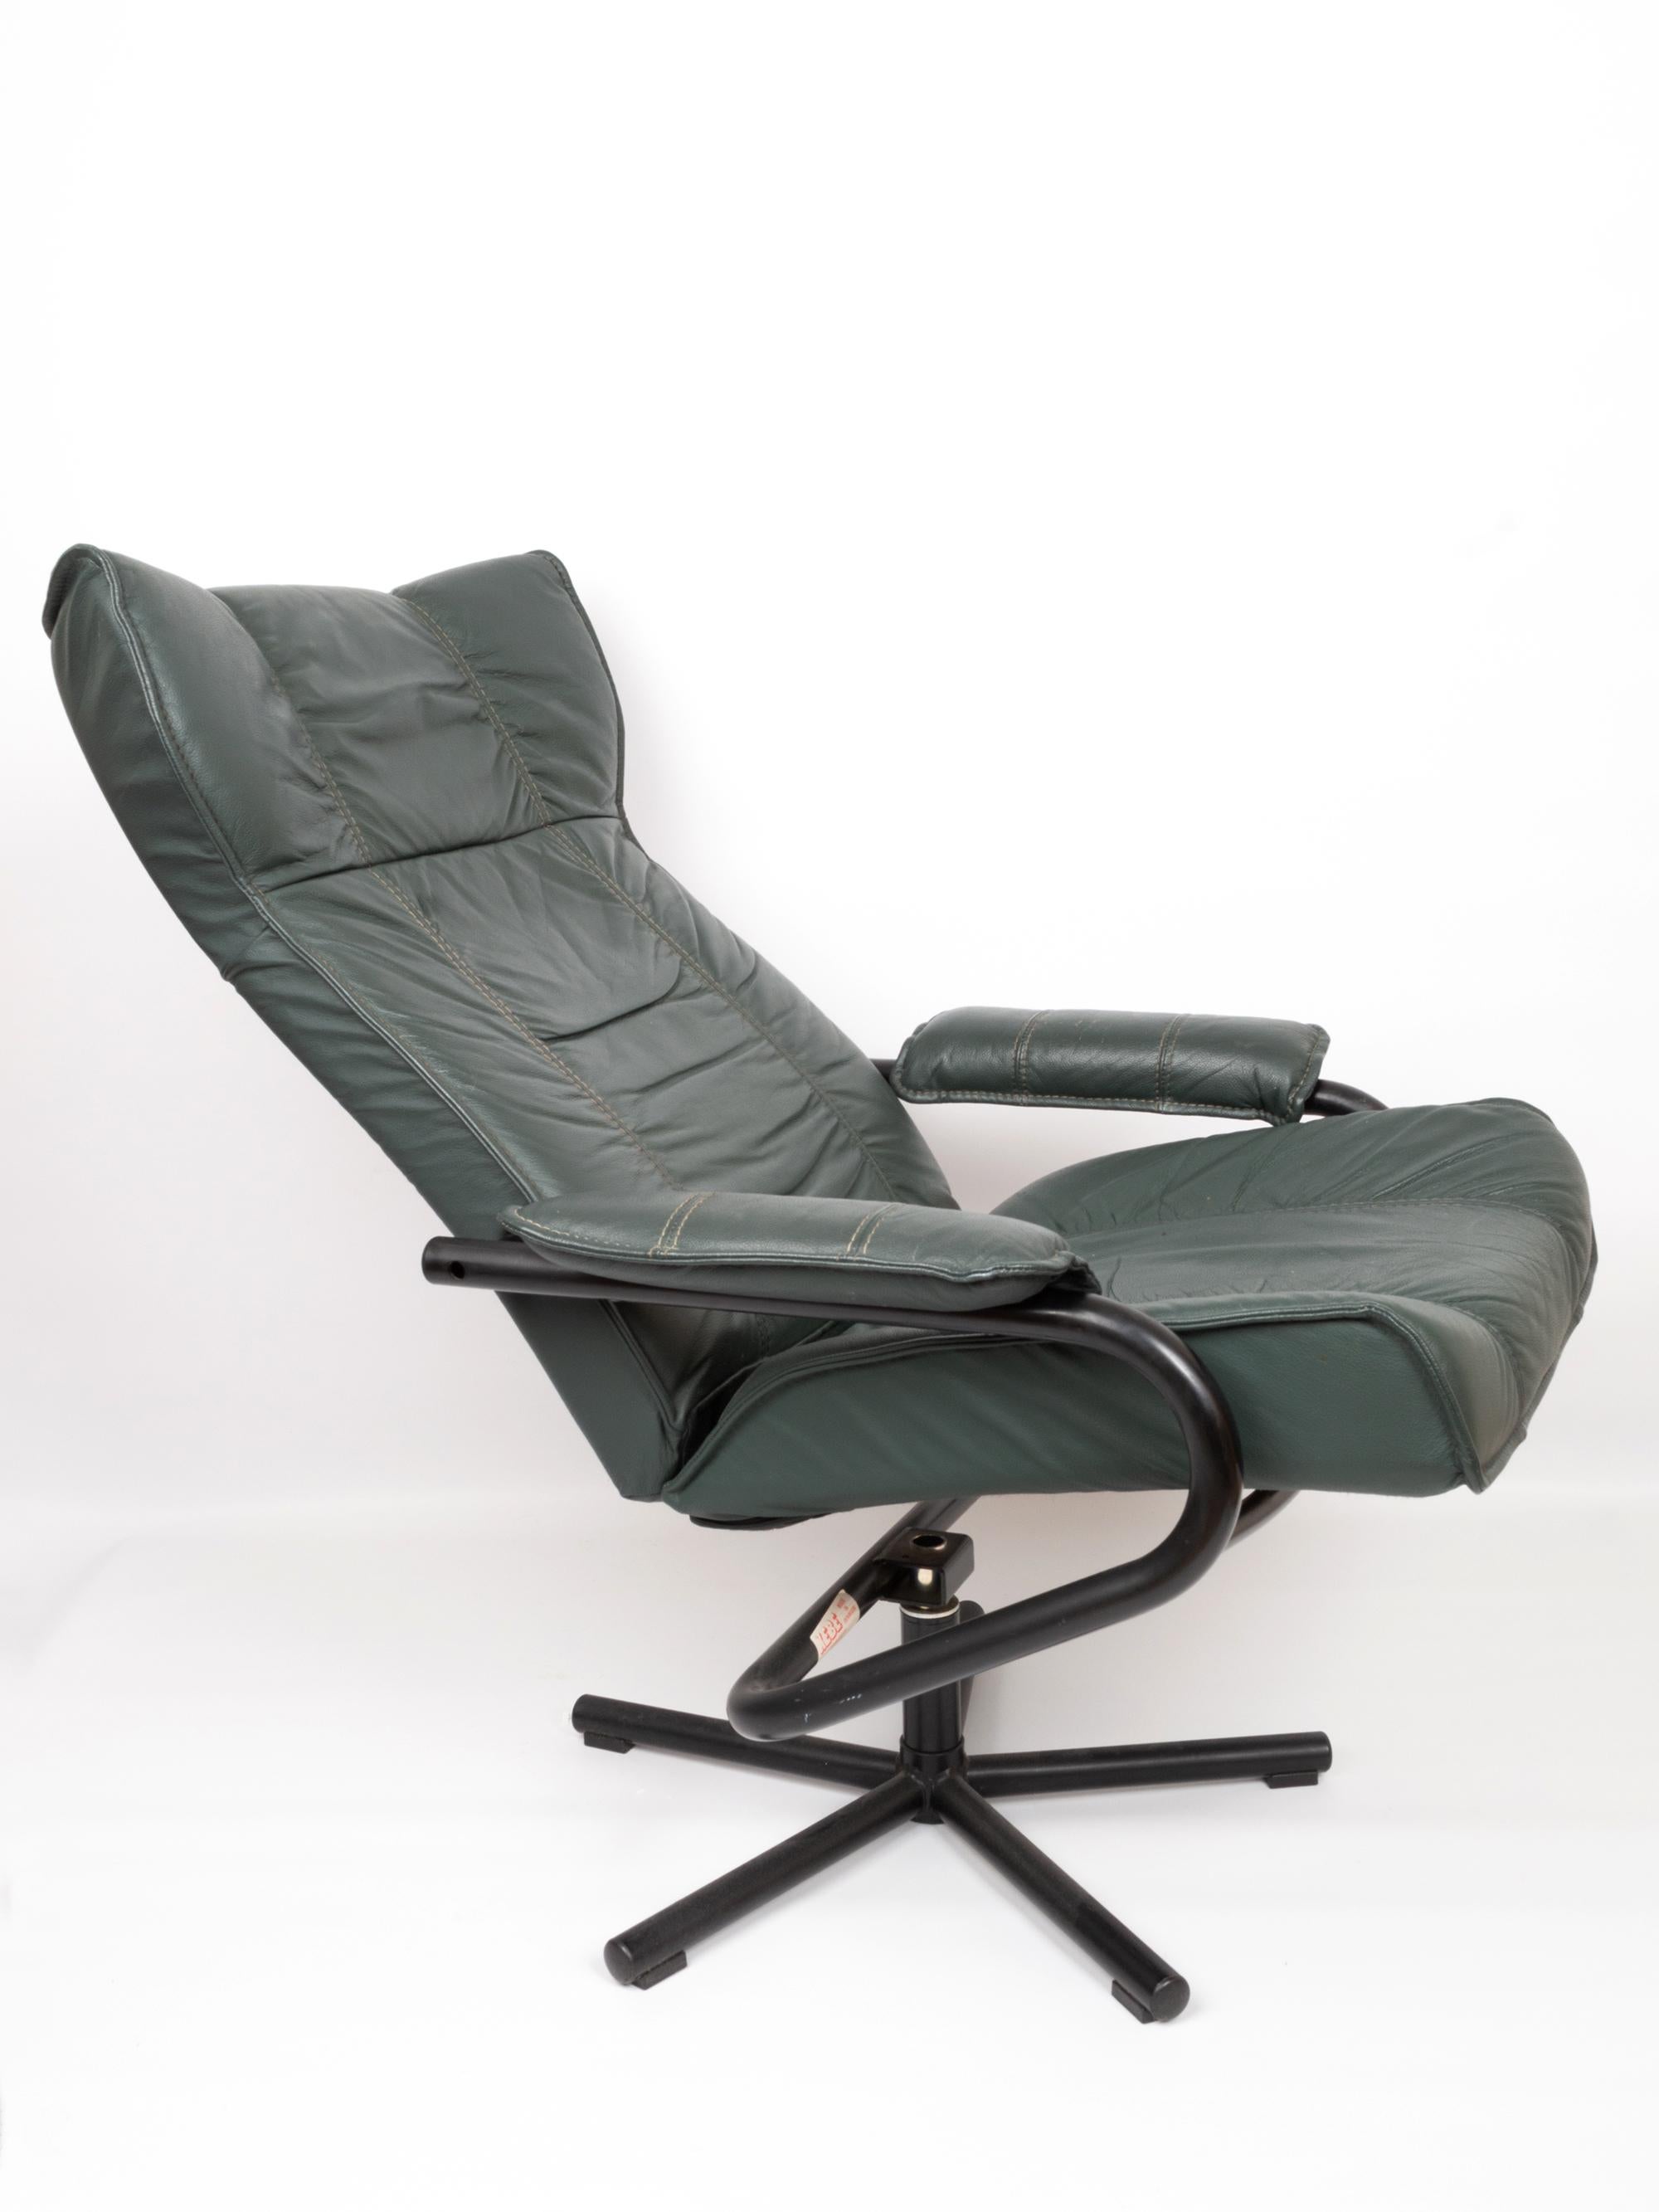 Mid-Century Modern Danish Leather Recliner Swivel Lounge Chair by Kebe, Denmark, circa 1970